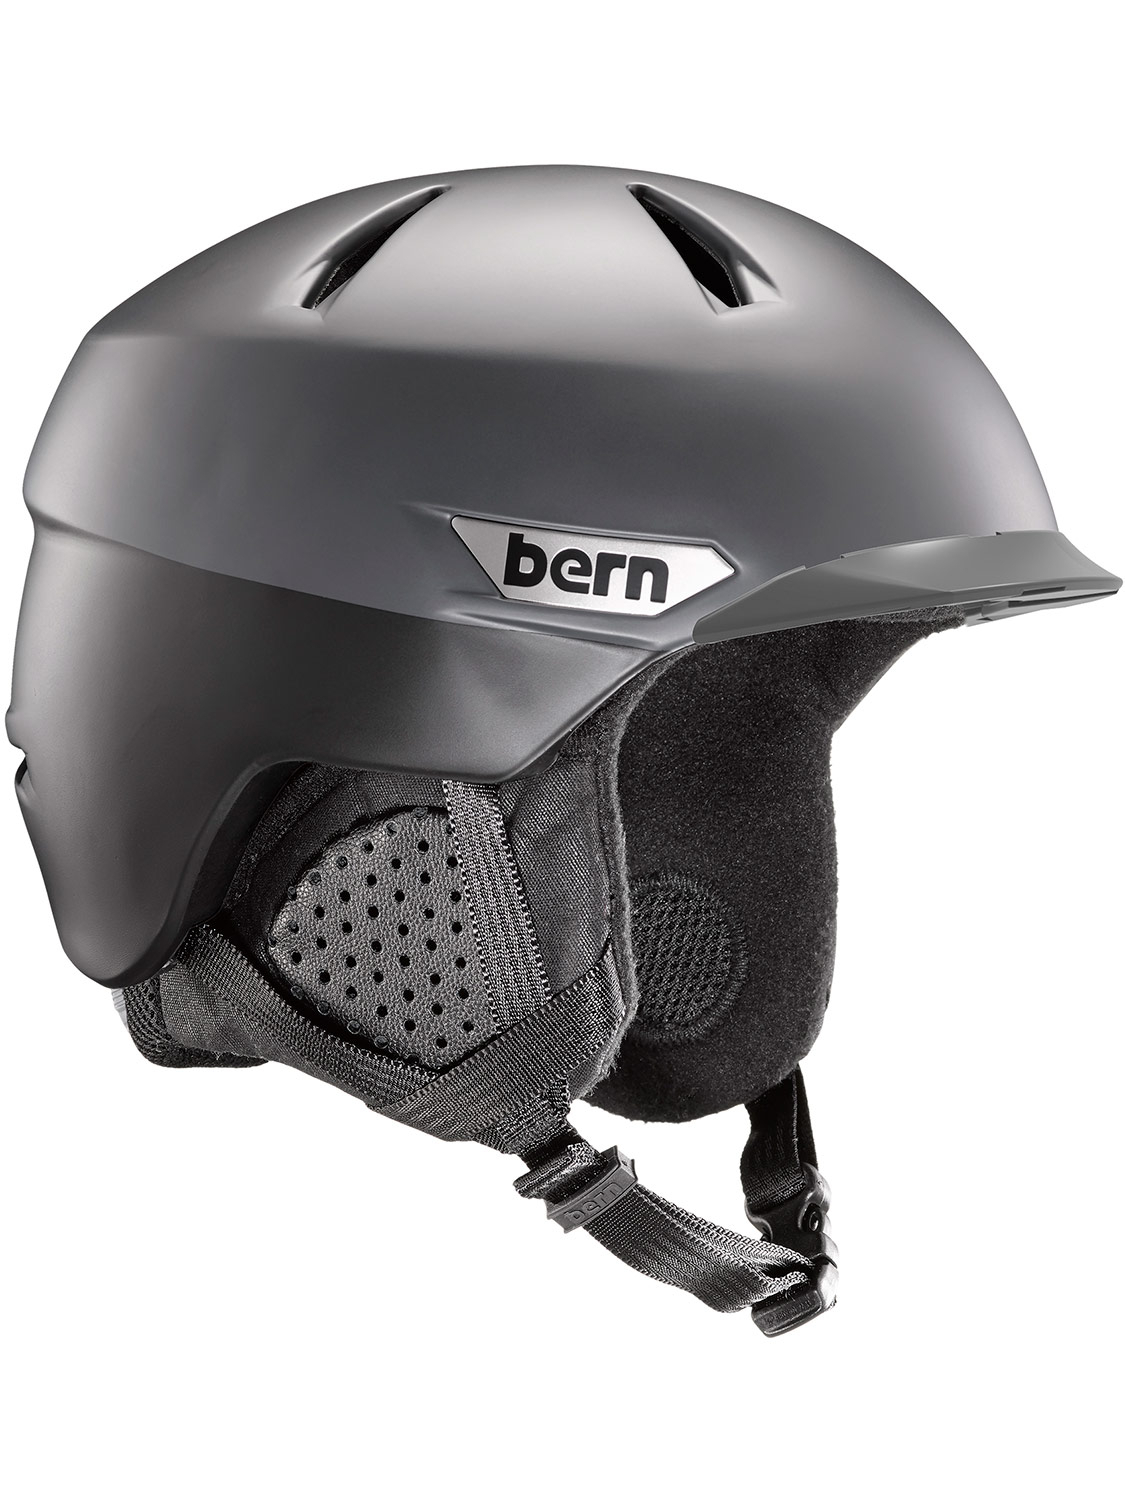 Bern Mens Weston Peak Helmet Black - Size: Small